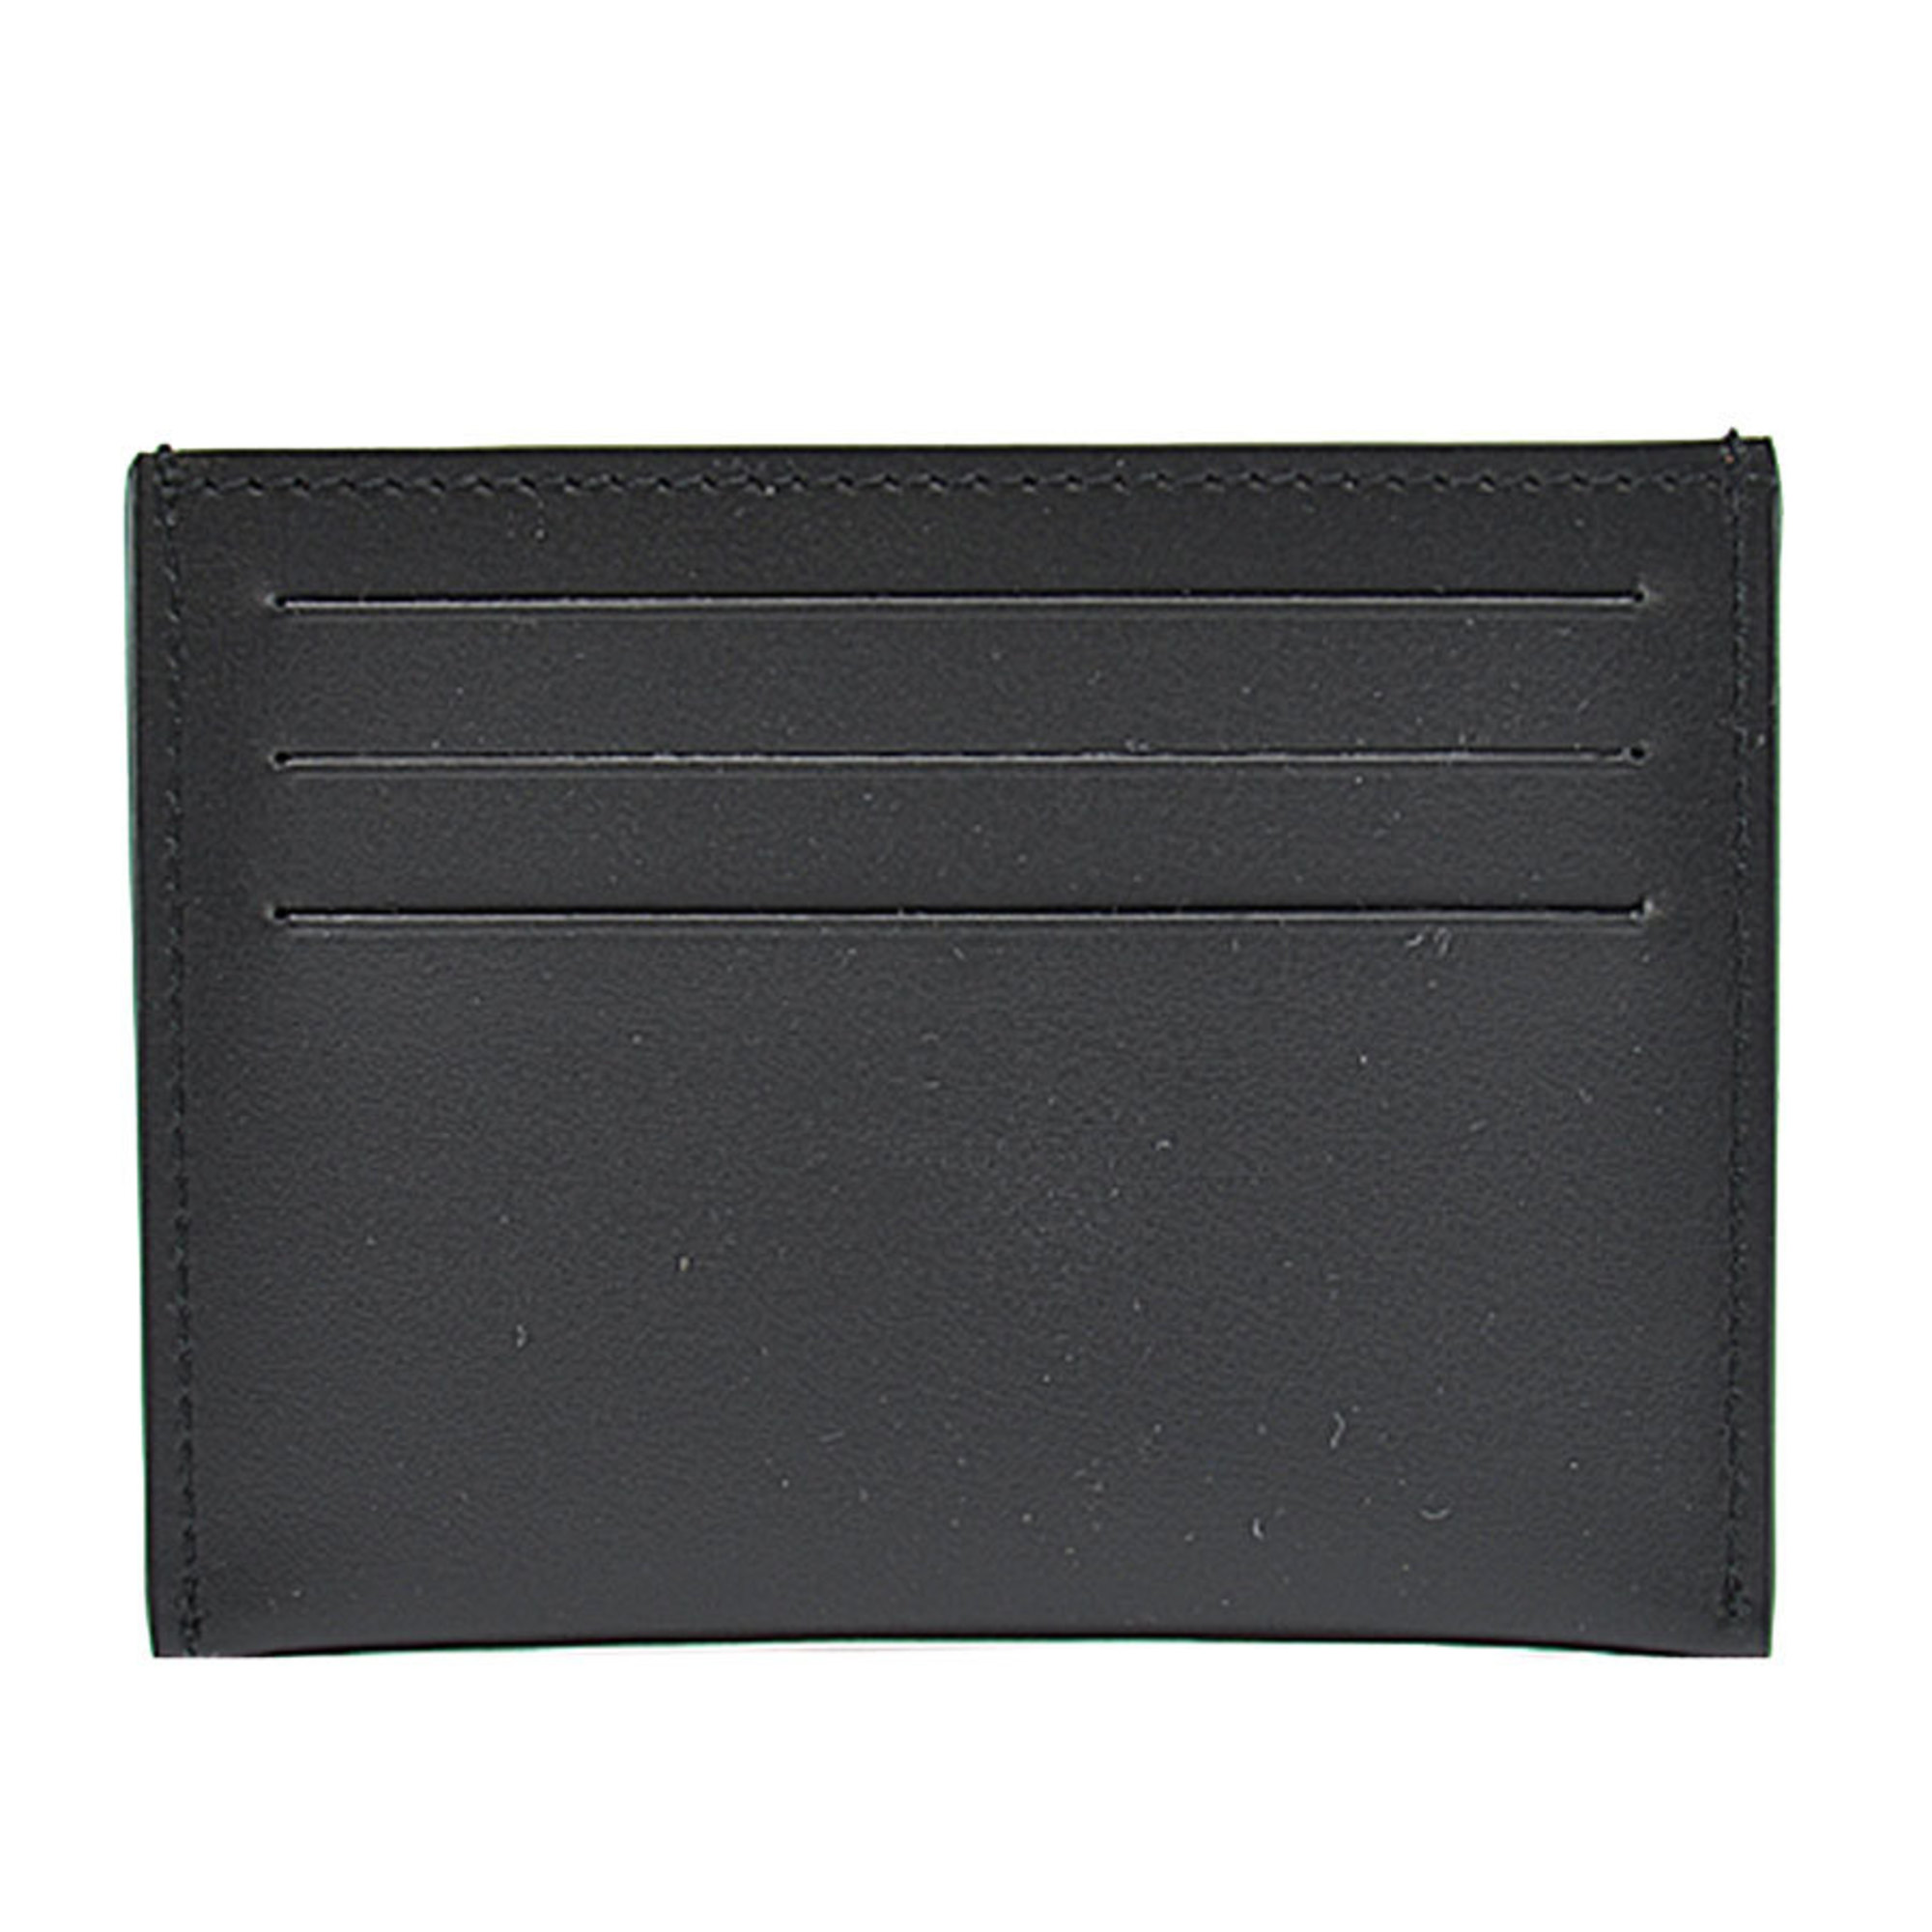 Givenchy GIVENCHY card case black x orange leather pass women's men's